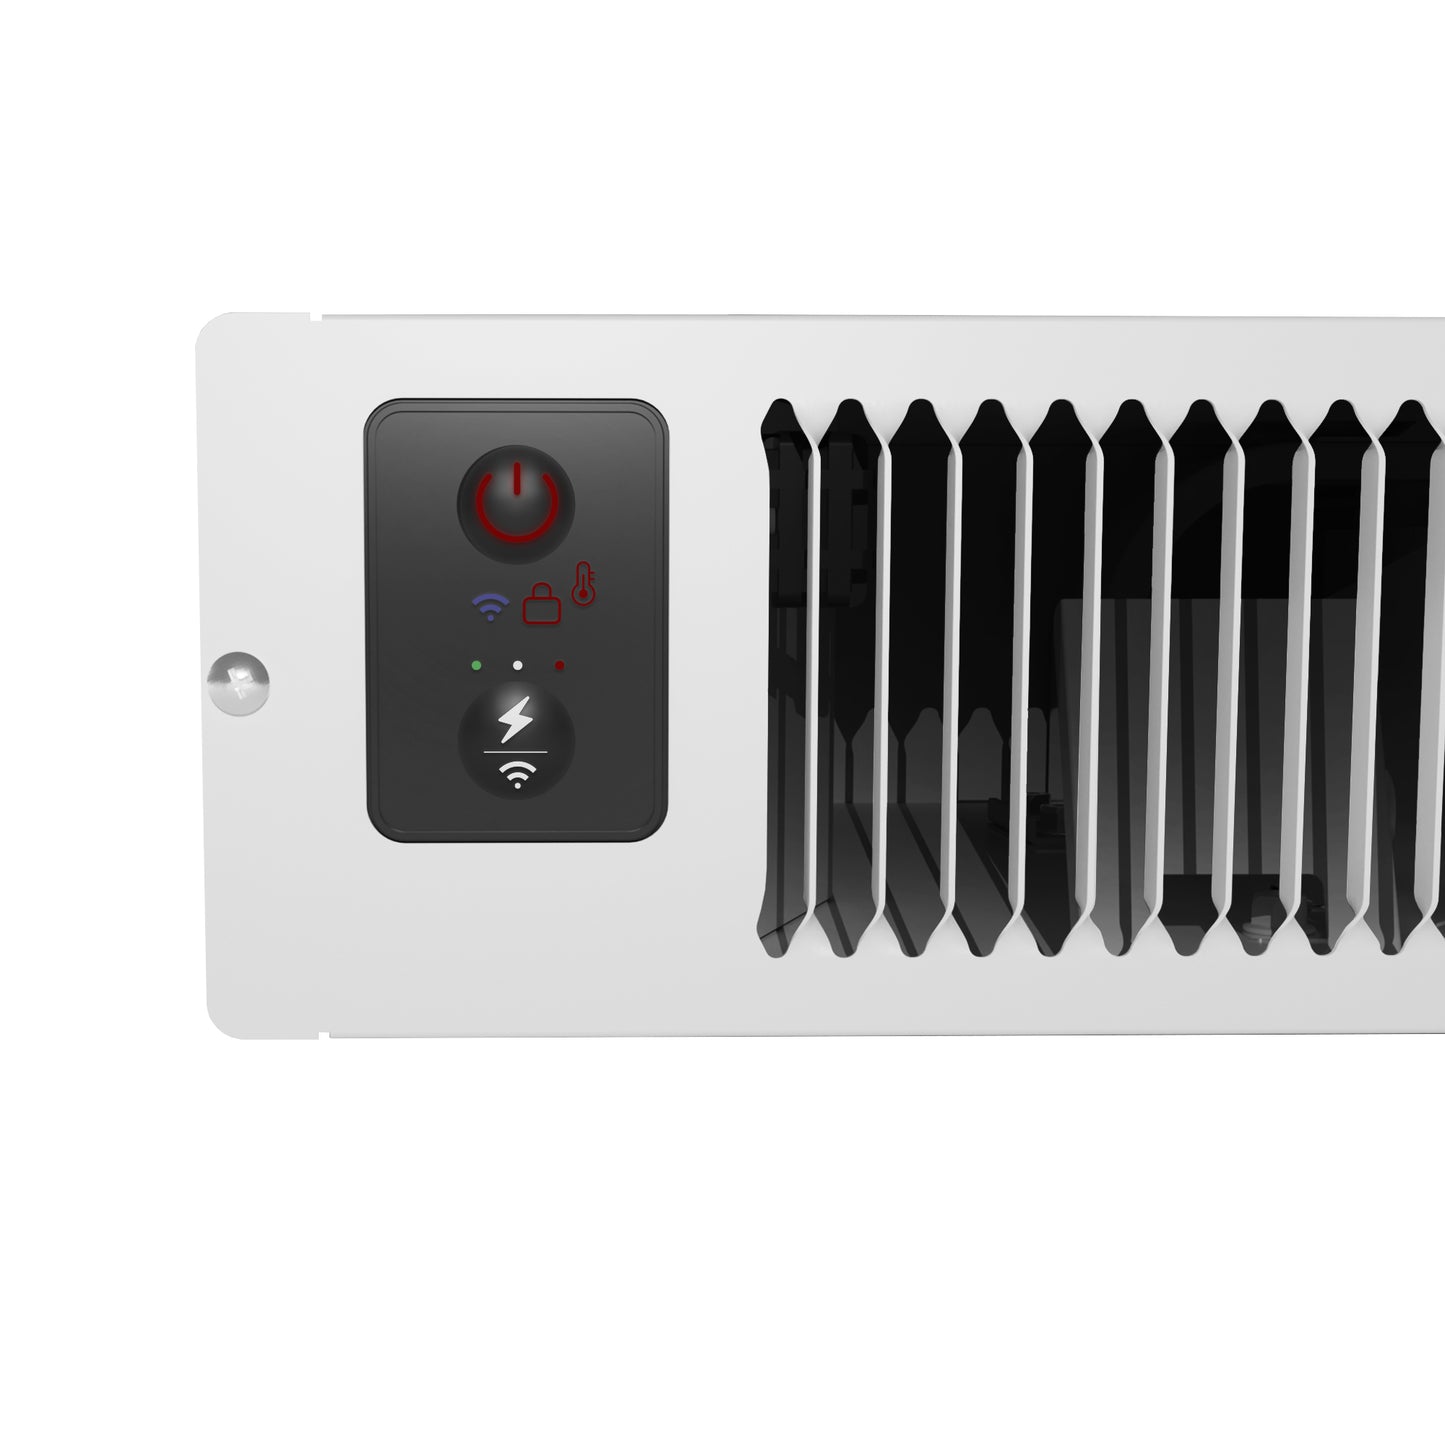 Control panel of kickspace Heater